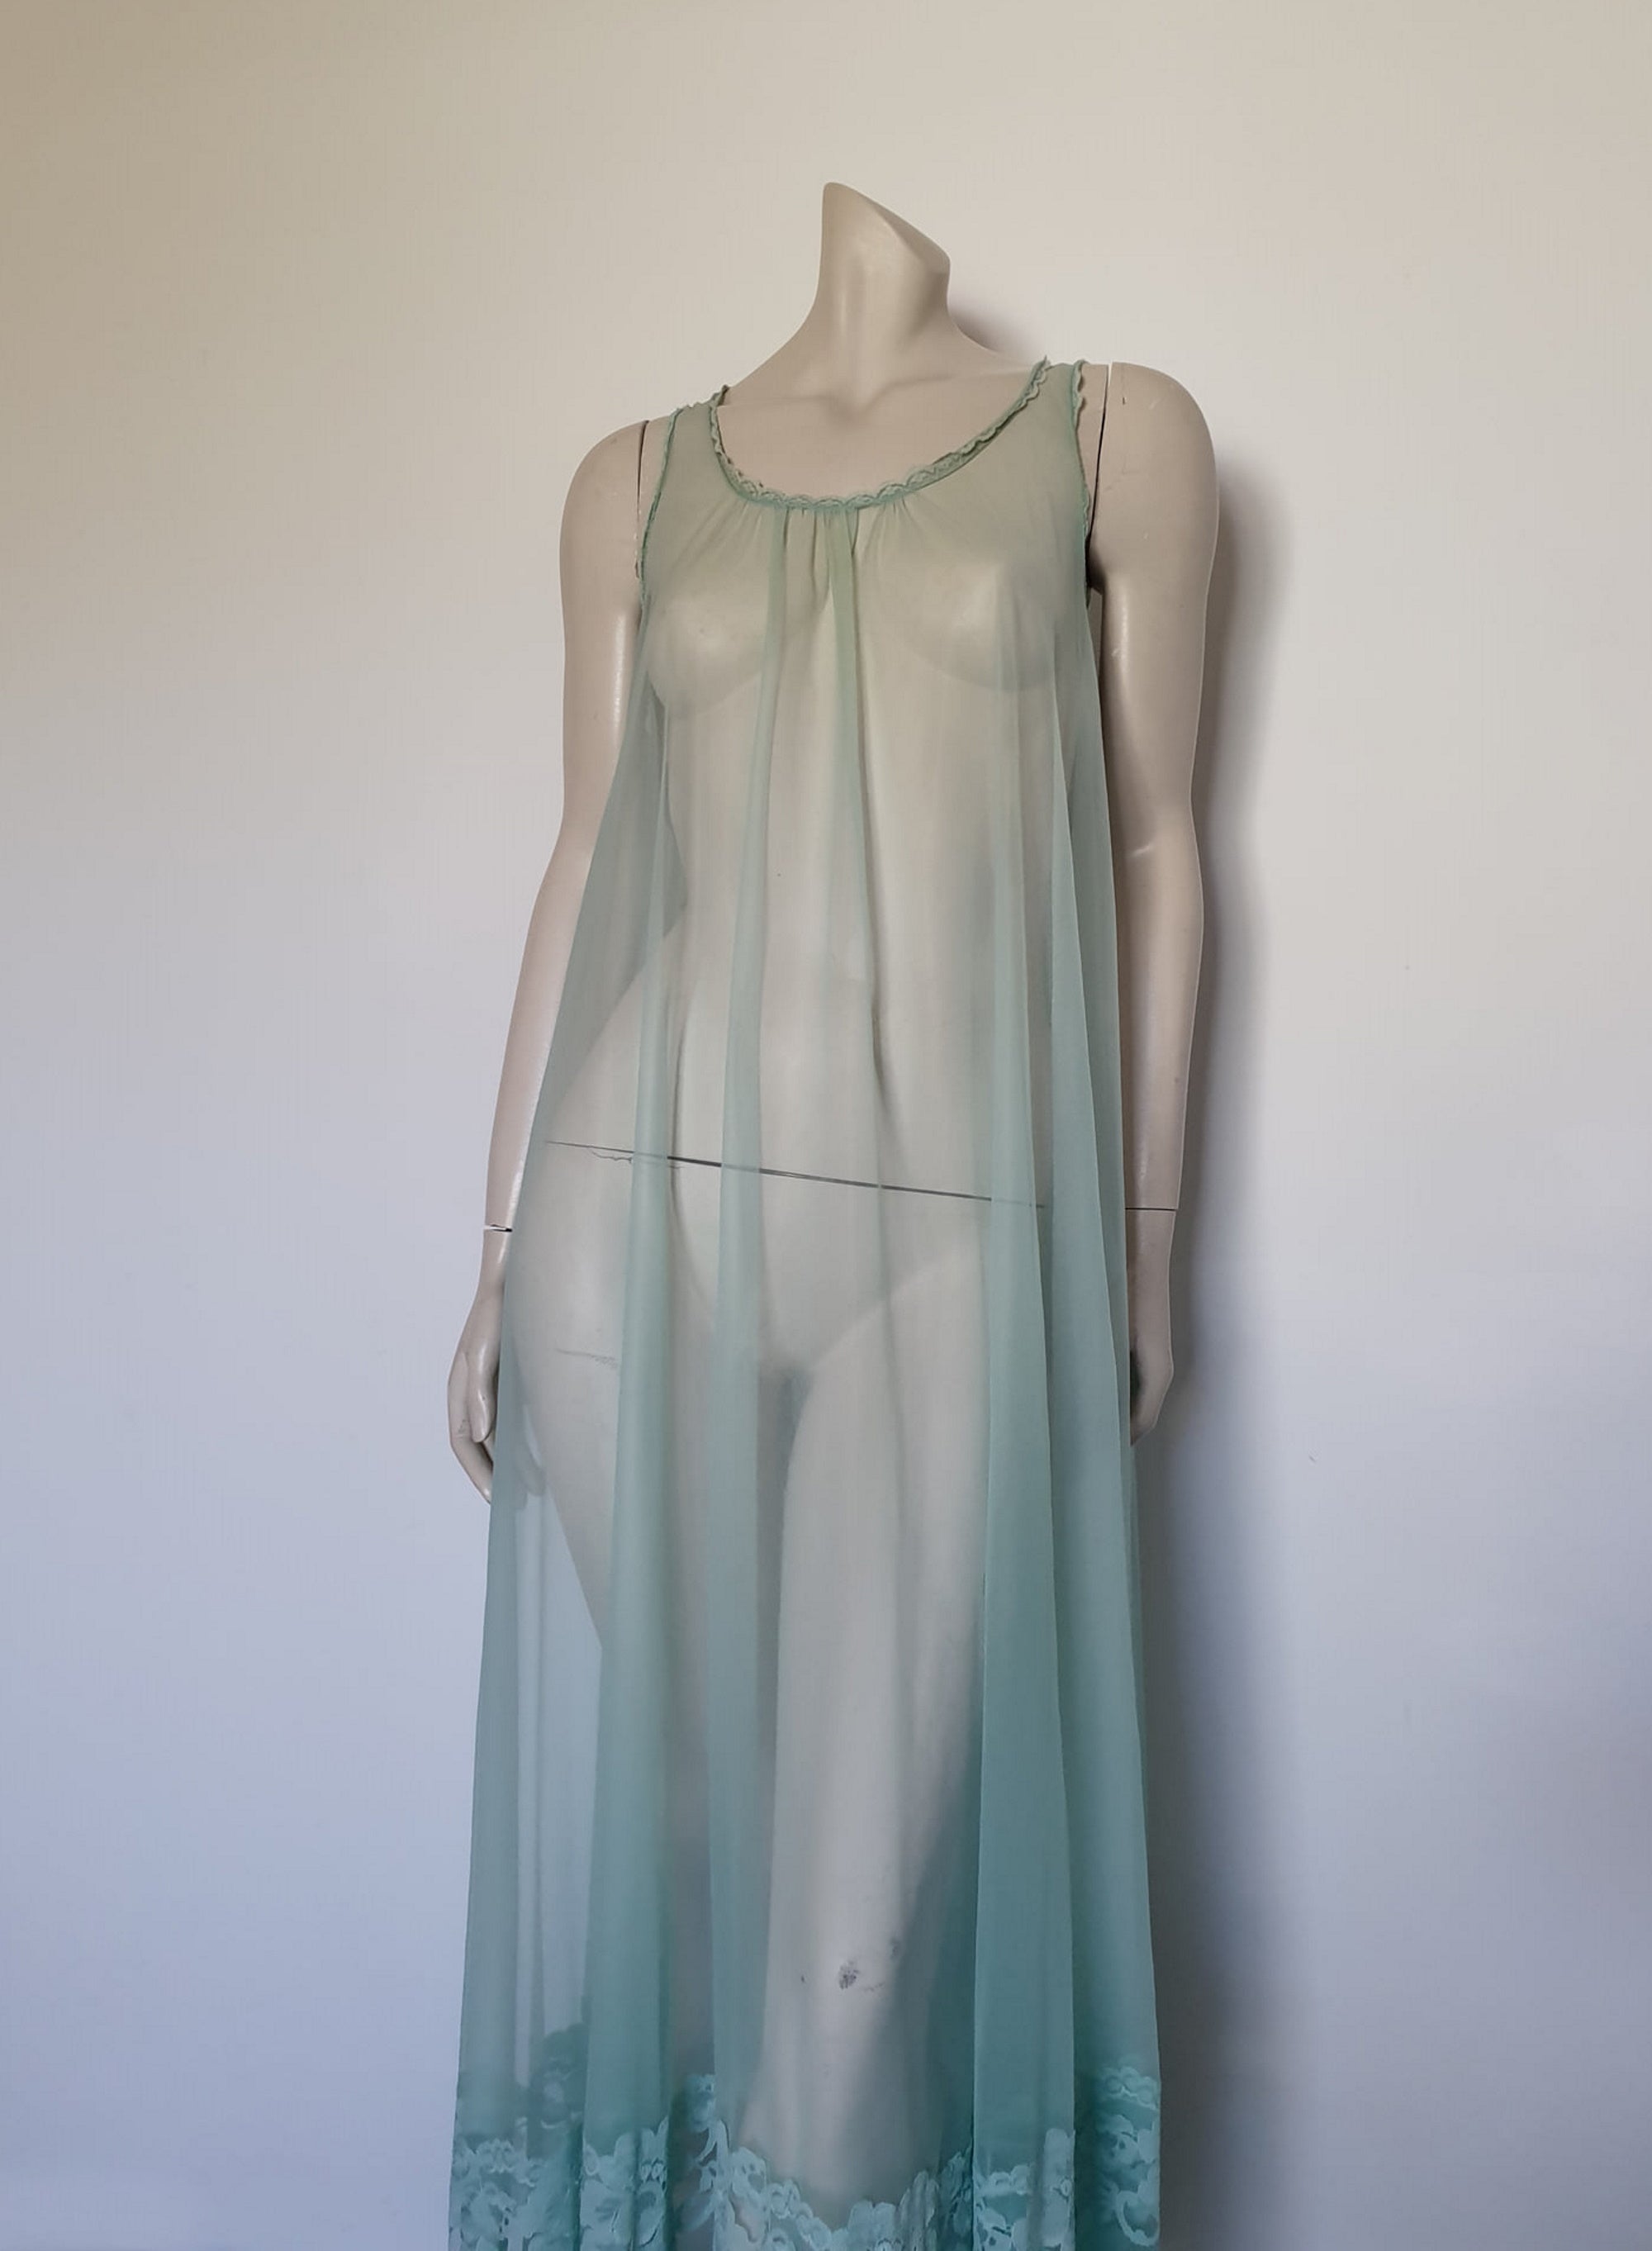 Sheer Aquamarine Negligee, Nightgown - M – Louisa Amelia Jane Vintage